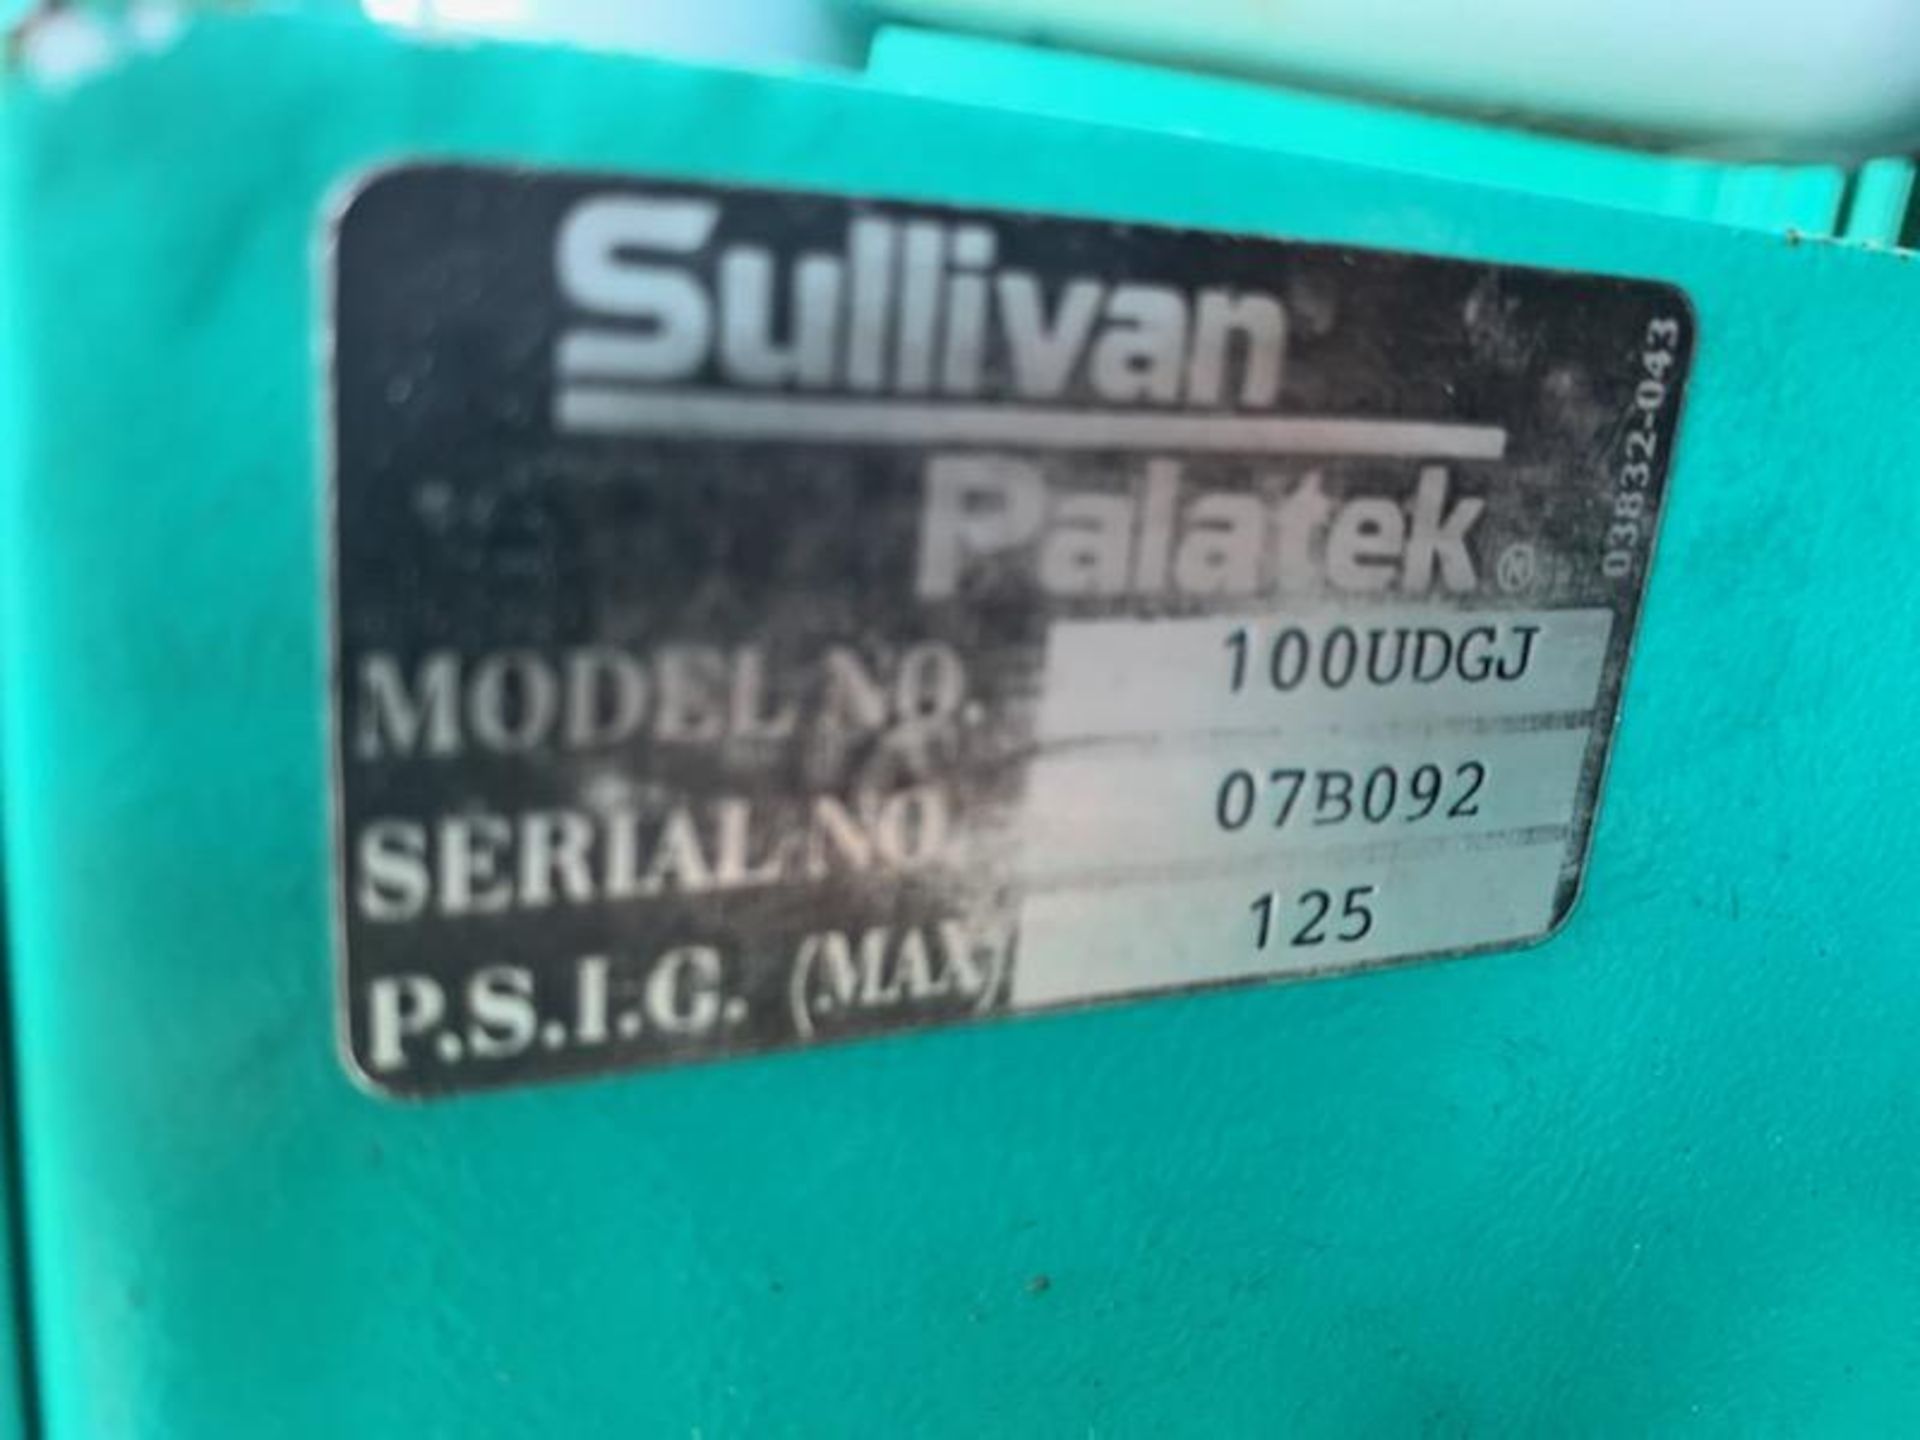 Sullivan Palatek 100UDGJ Rotary Screw Air Compressor with Air Dryer - Image 4 of 7